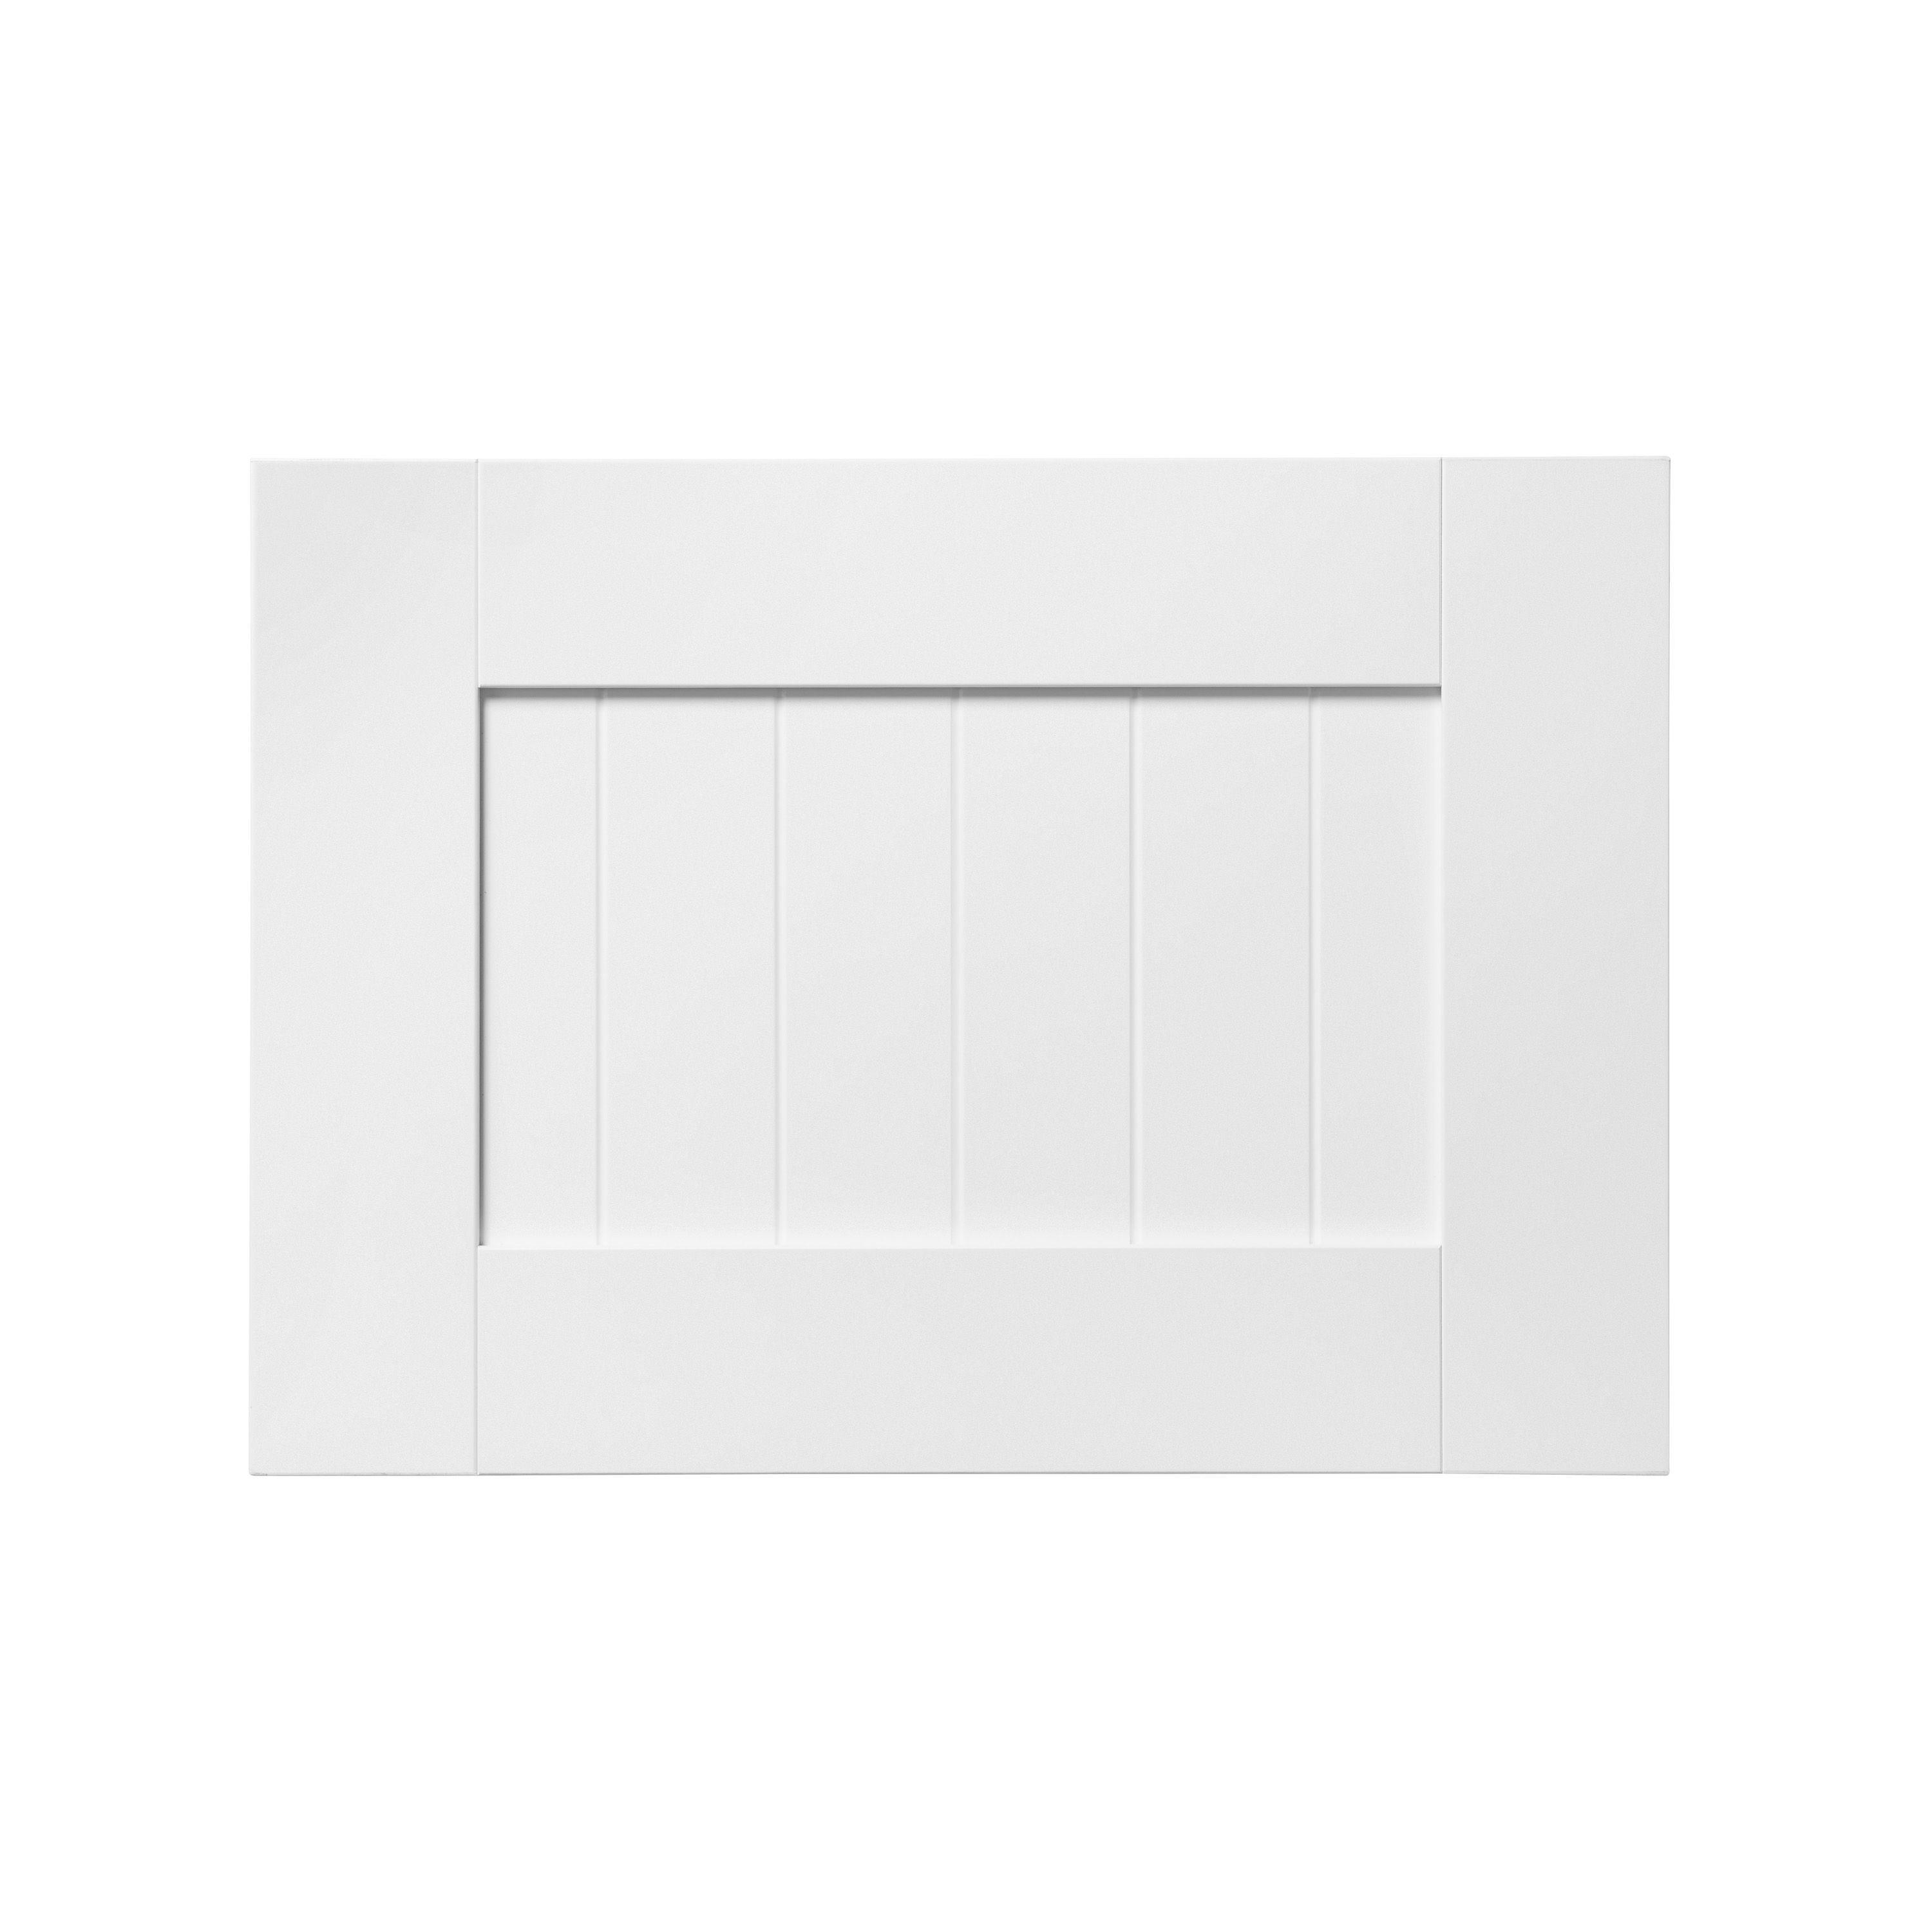 GoodHome Alpinia Matt white tongue & groove shaker Drawer front, bridging door & bi fold door, (W)500mm (H)356mm (T)18mm